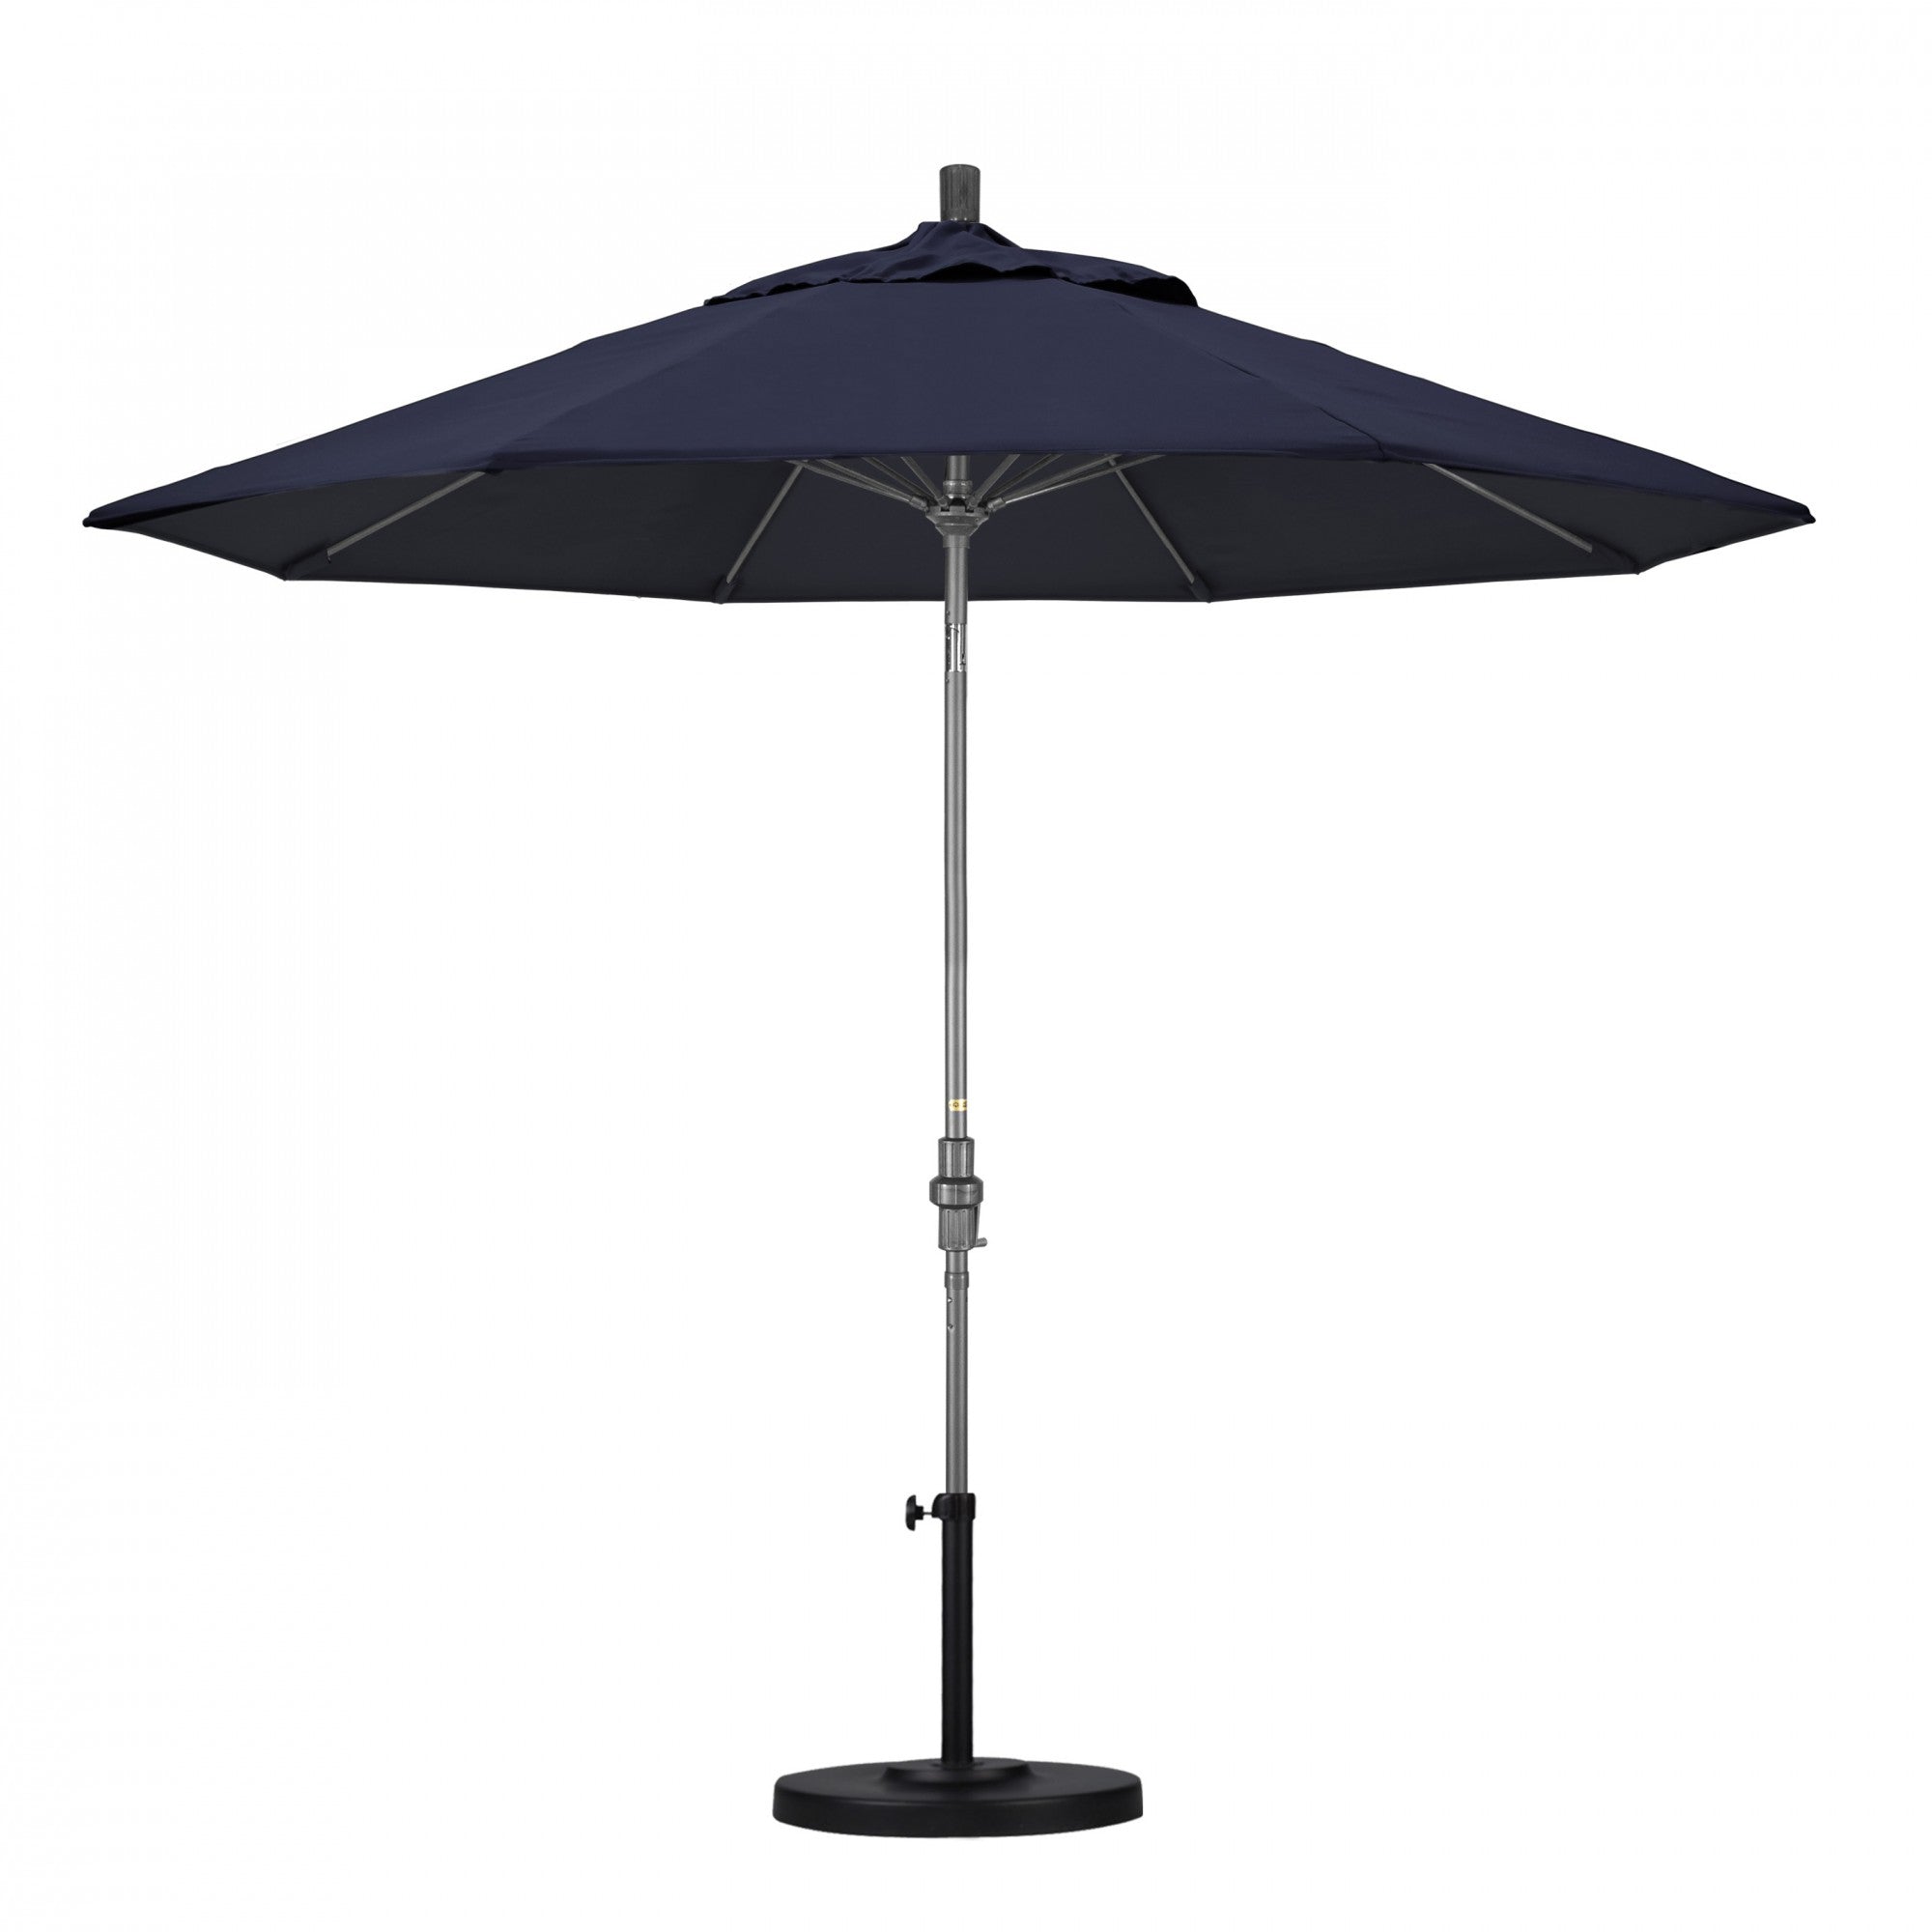 California Umbrella - 9' - Patio Umbrella Umbrella - Aluminum Pole - Navy - Sunbrella  - GSCUF908010-5439